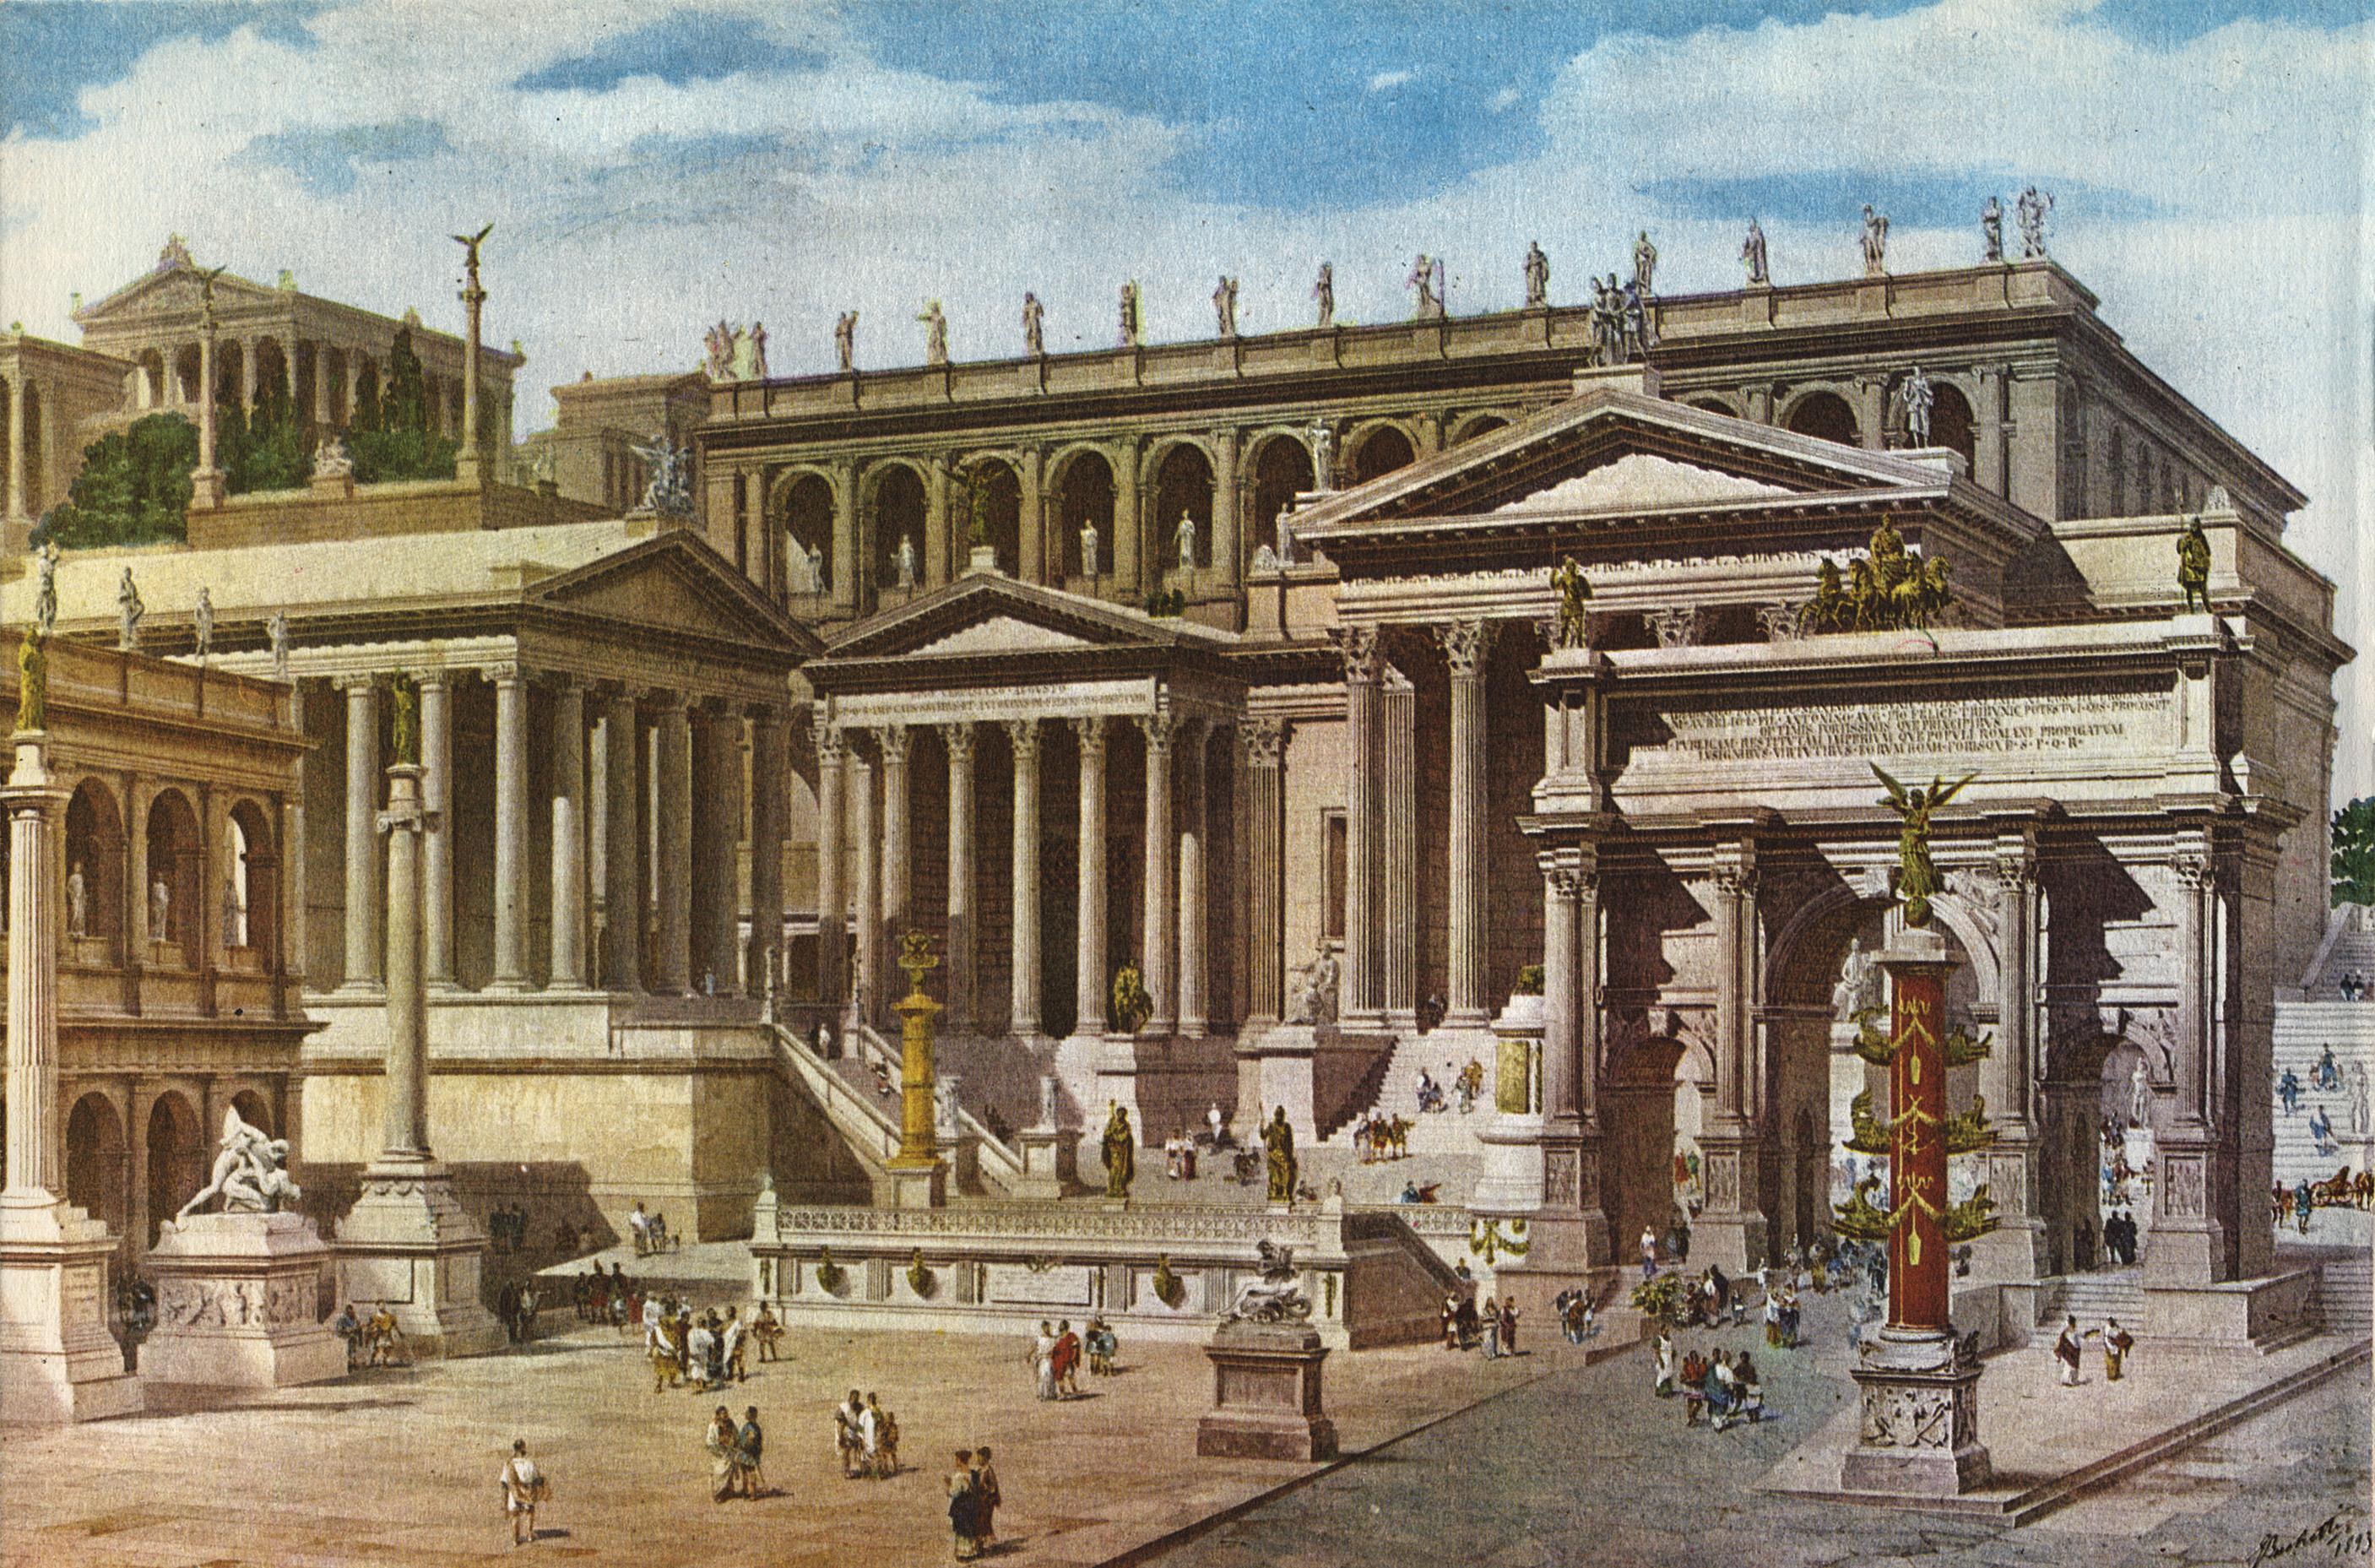 ancient roman background